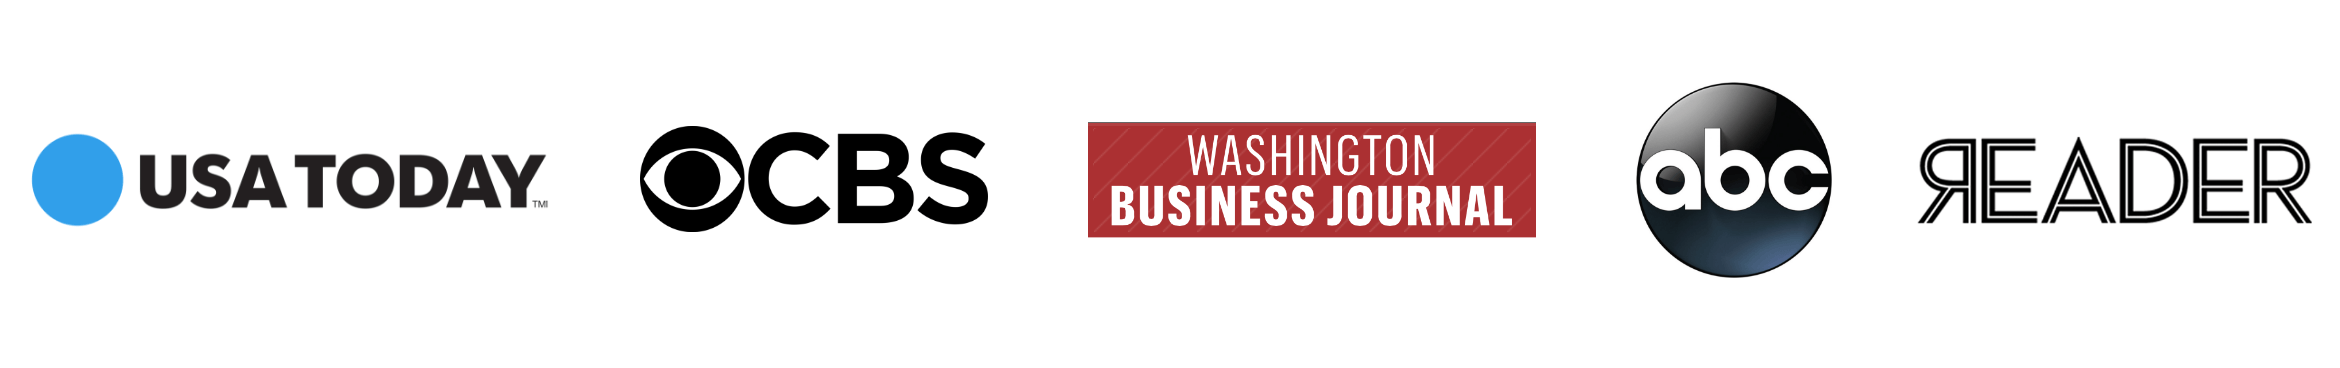 Media logos USA Today, CBS, Washington Business Journal, ABC, Reader